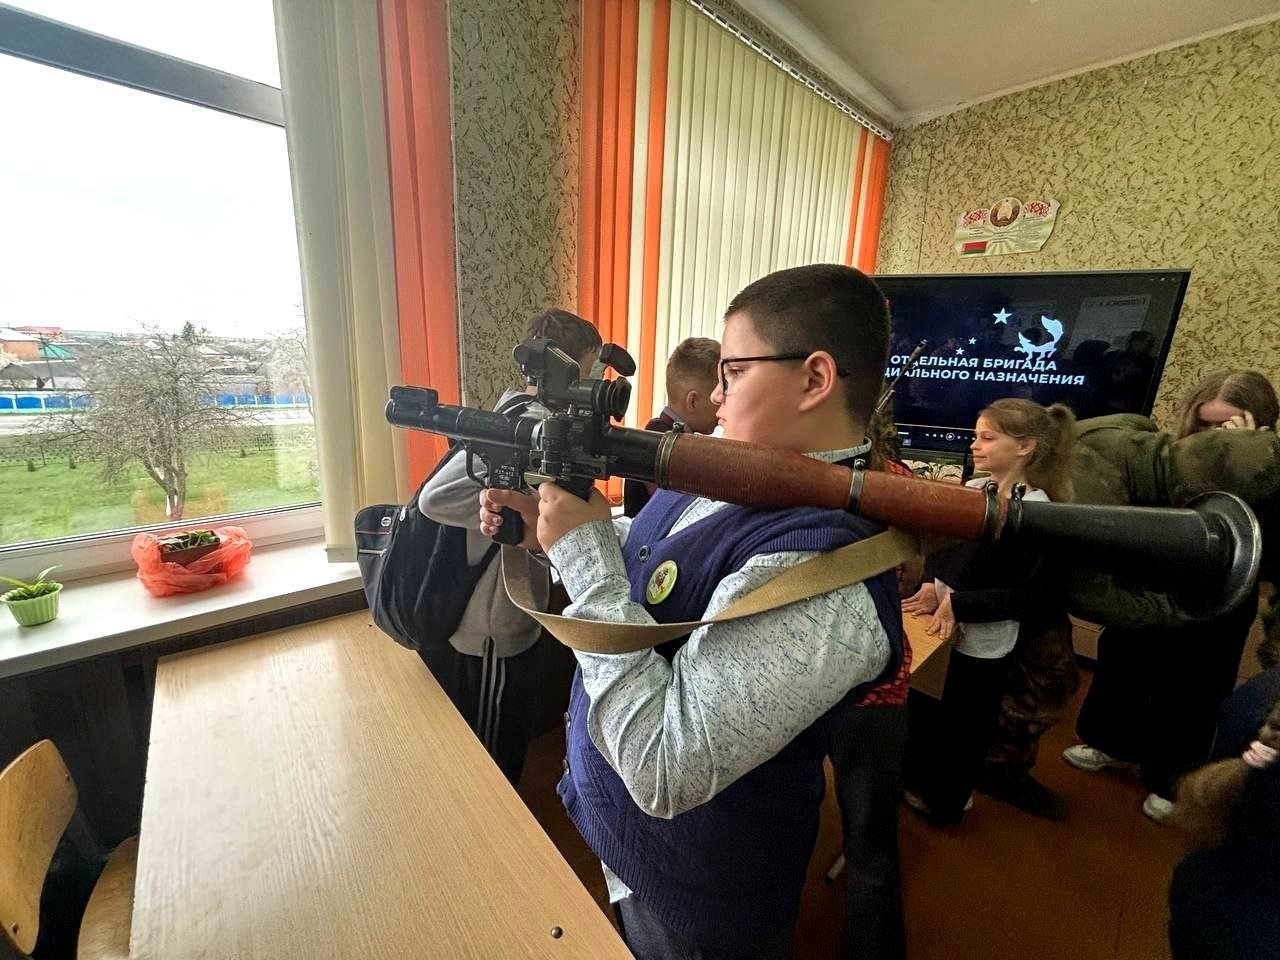 A boy aims a grenade launcher in a school classroom